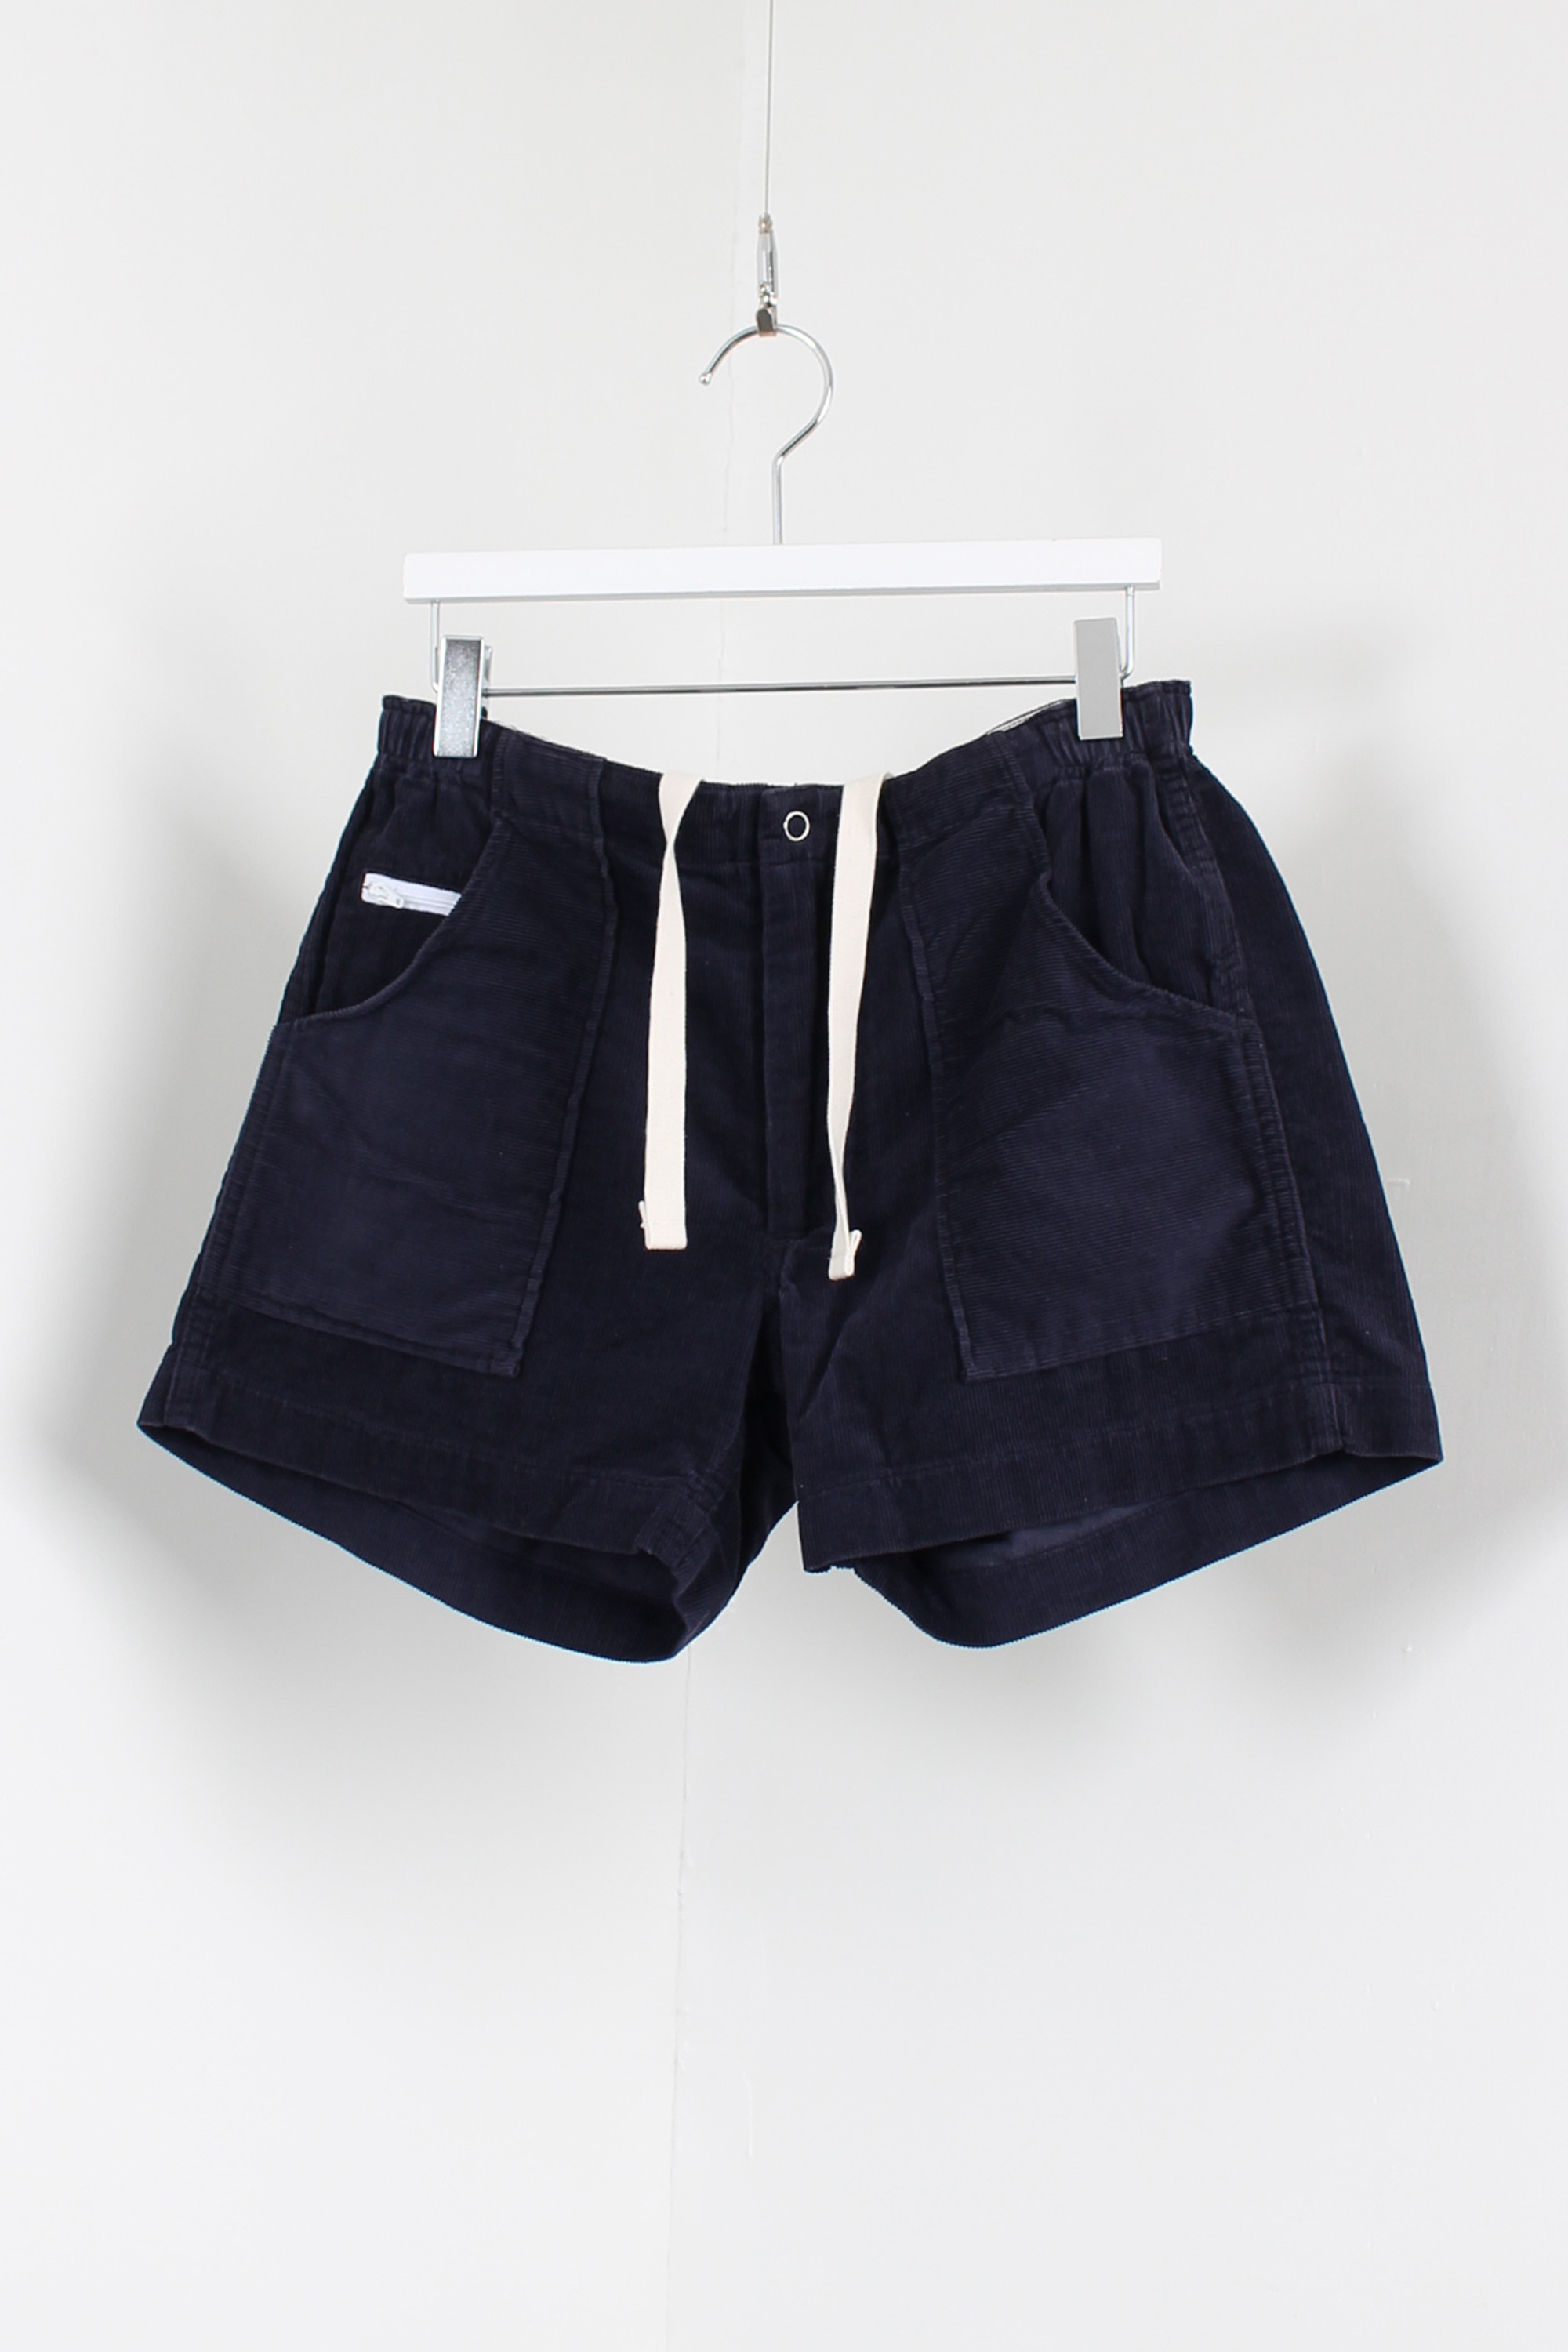 fwk by engineered garments shorts